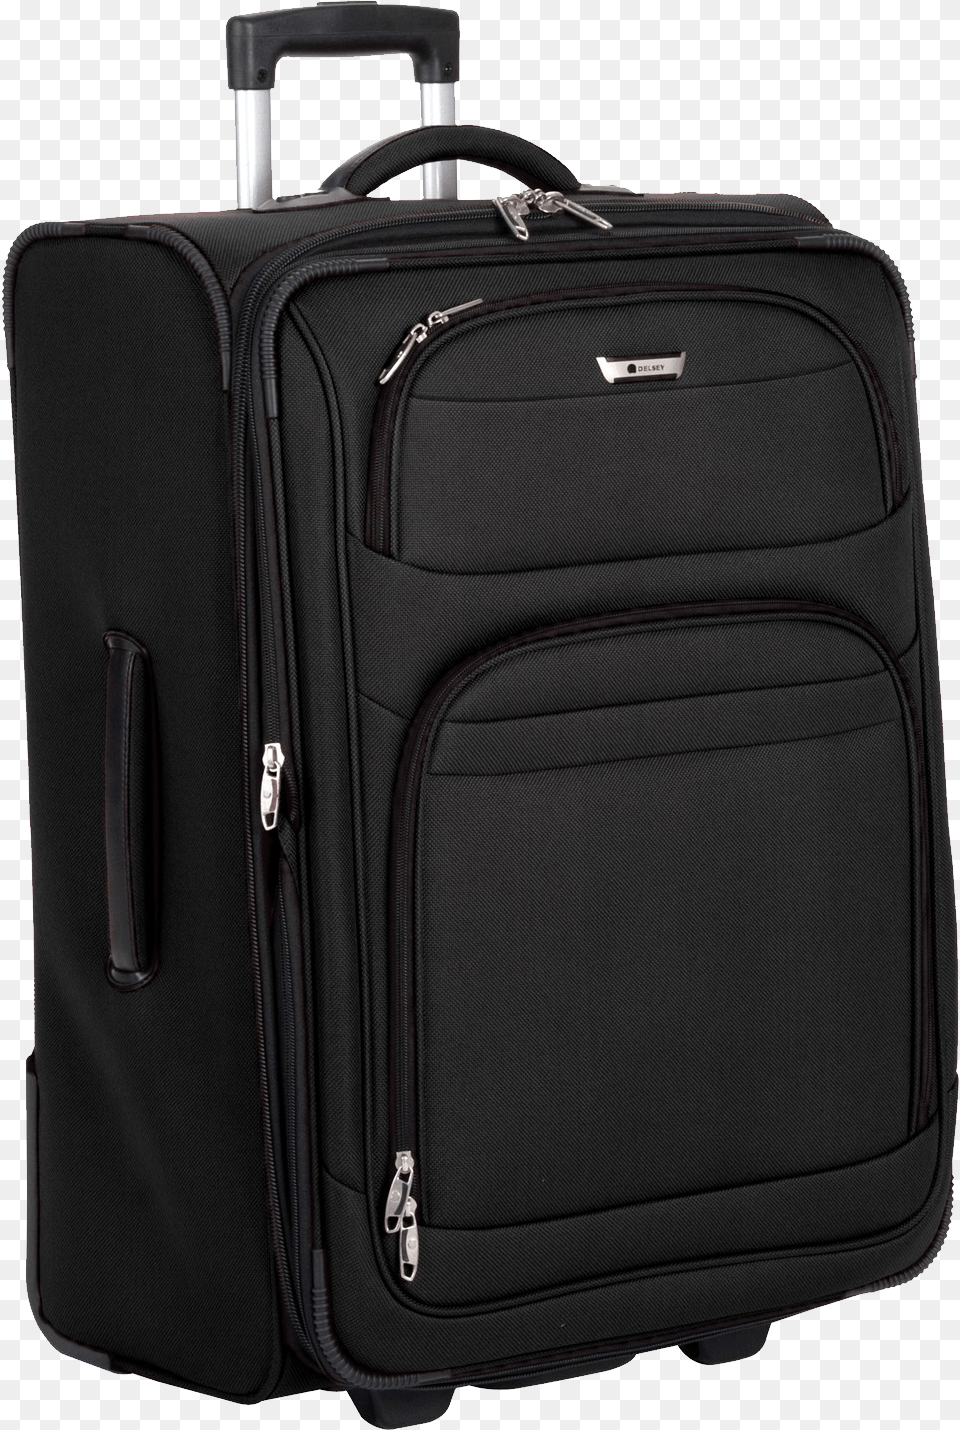 Black Suitcase Images Black Luggage, Baggage, Accessories, Bag, Handbag Free Transparent Png